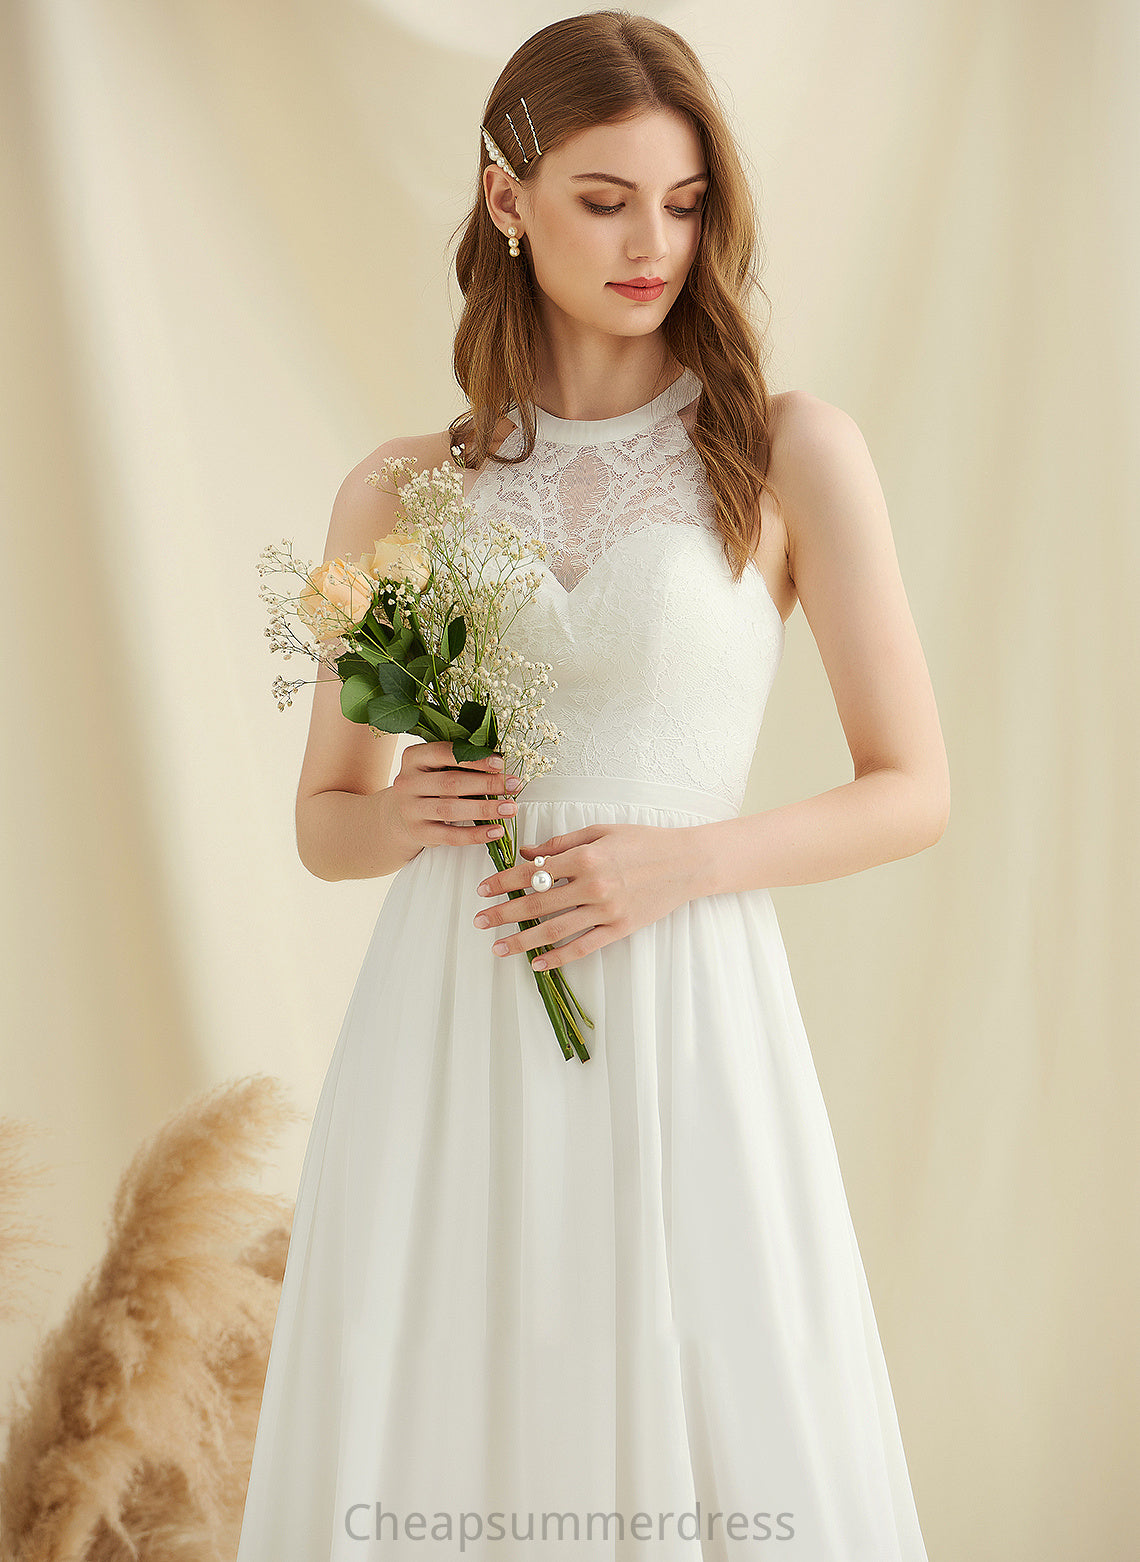 Wedding Wedding Dresses Split Chiffon Dress Scoop Neck Front Lace A-Line With Floor-Length Valeria